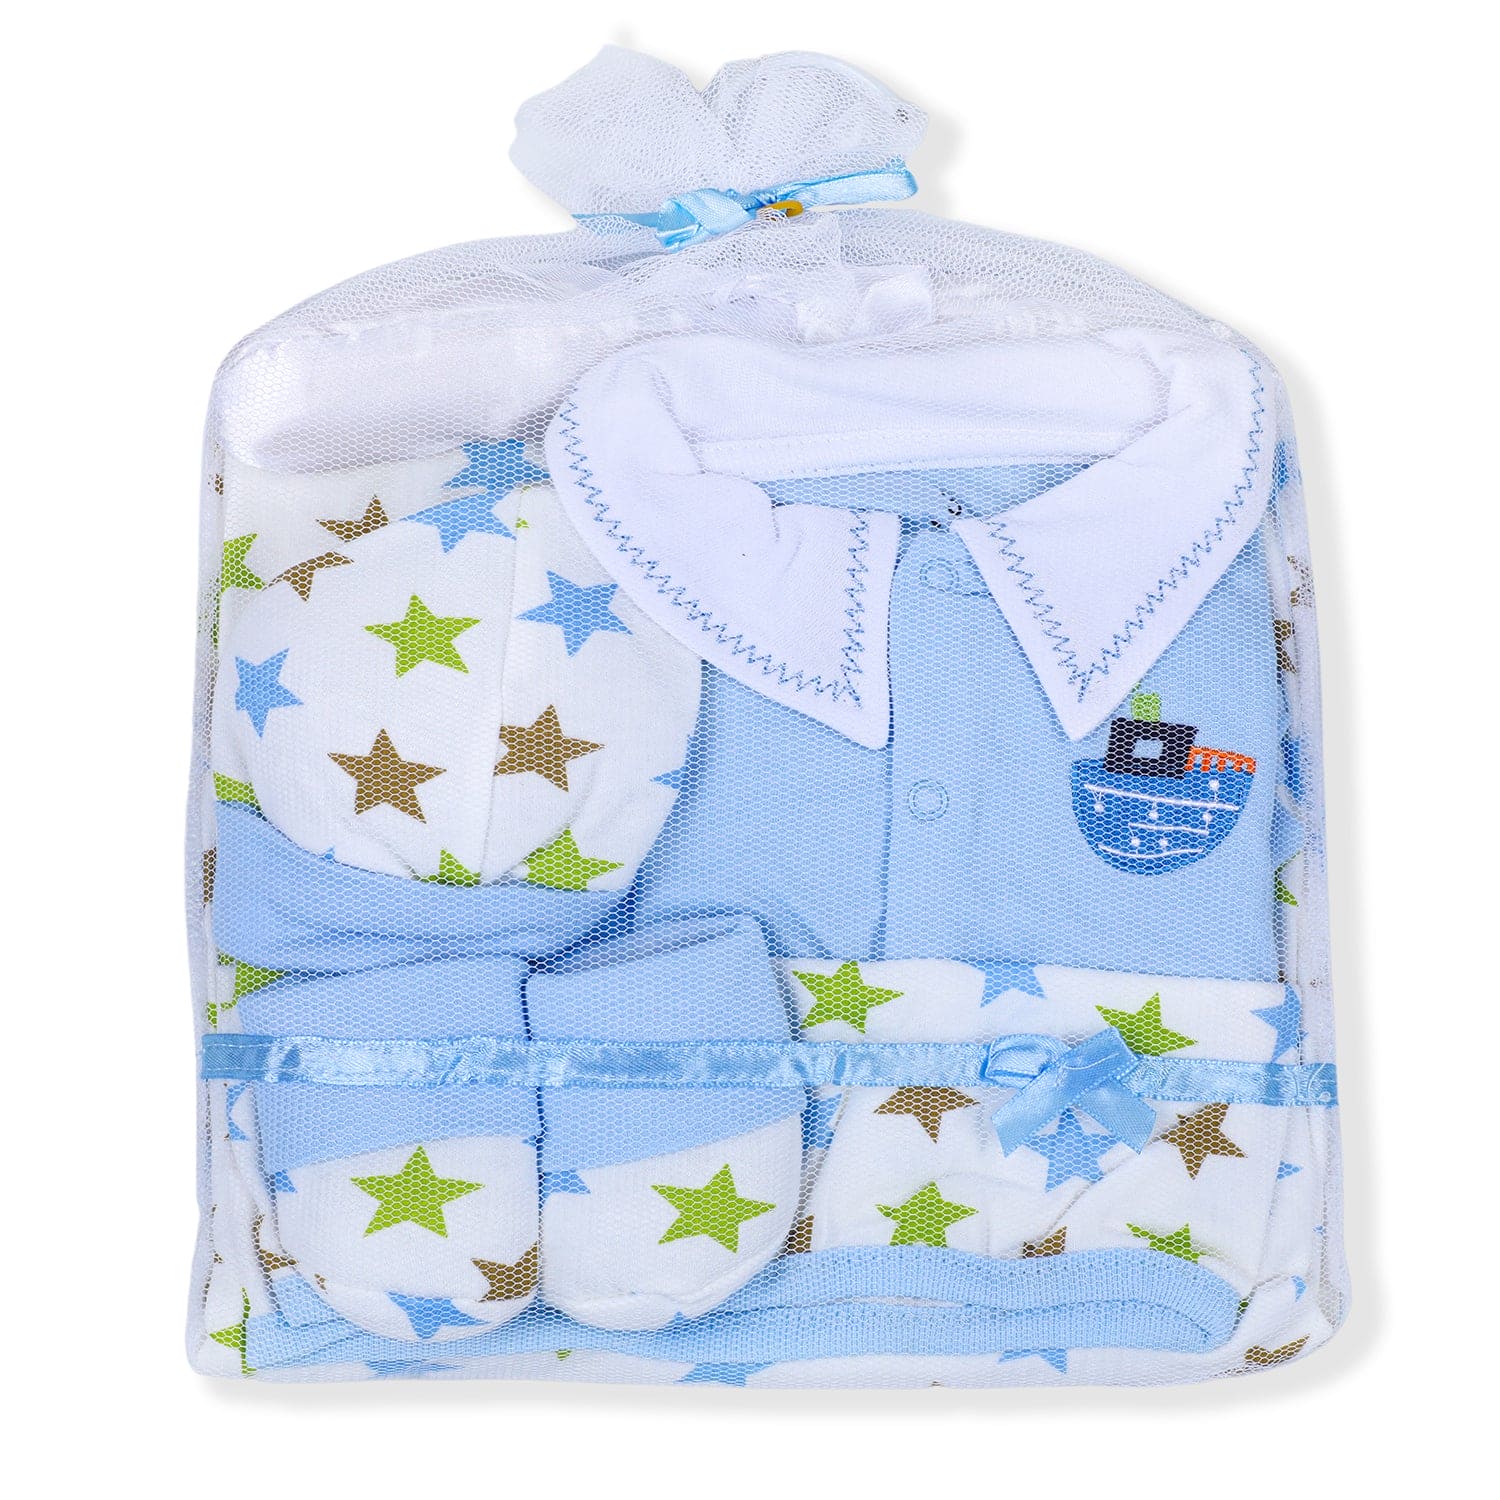 Bambini Newborn Baby Shower Layette Gift Box Set, 5pc (Baby Boys) -  Walmart.com